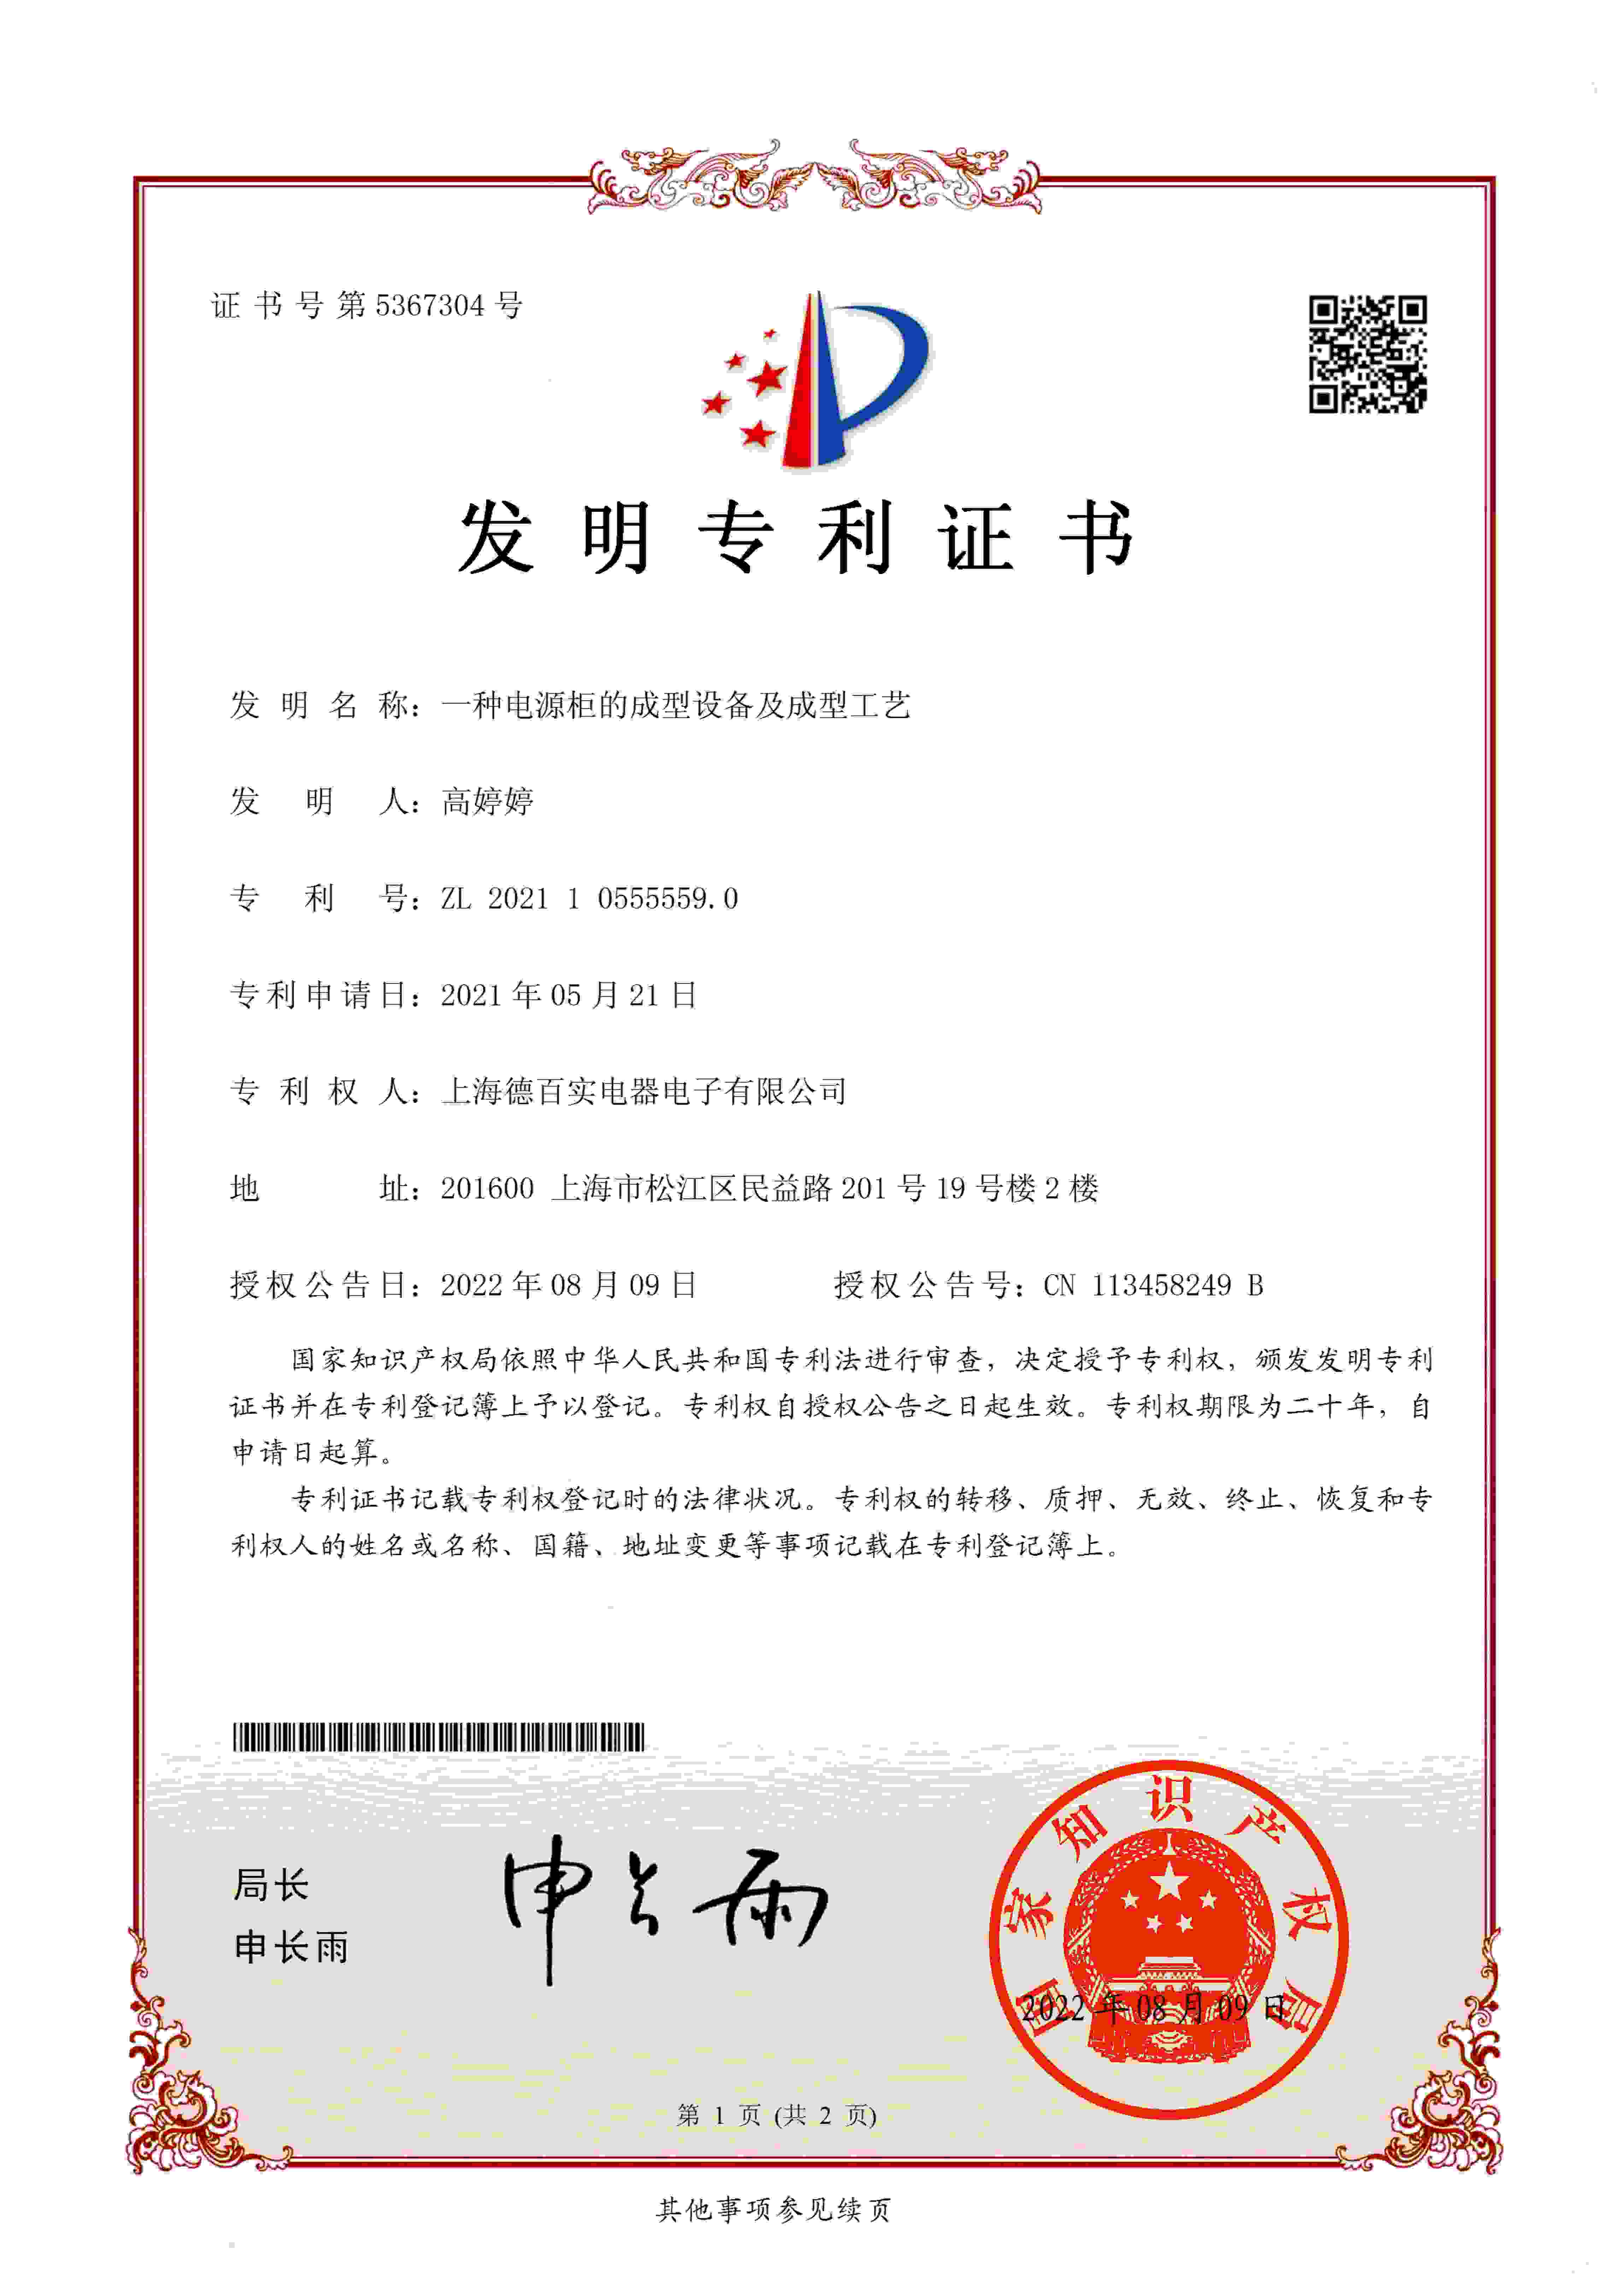 TPS certificate